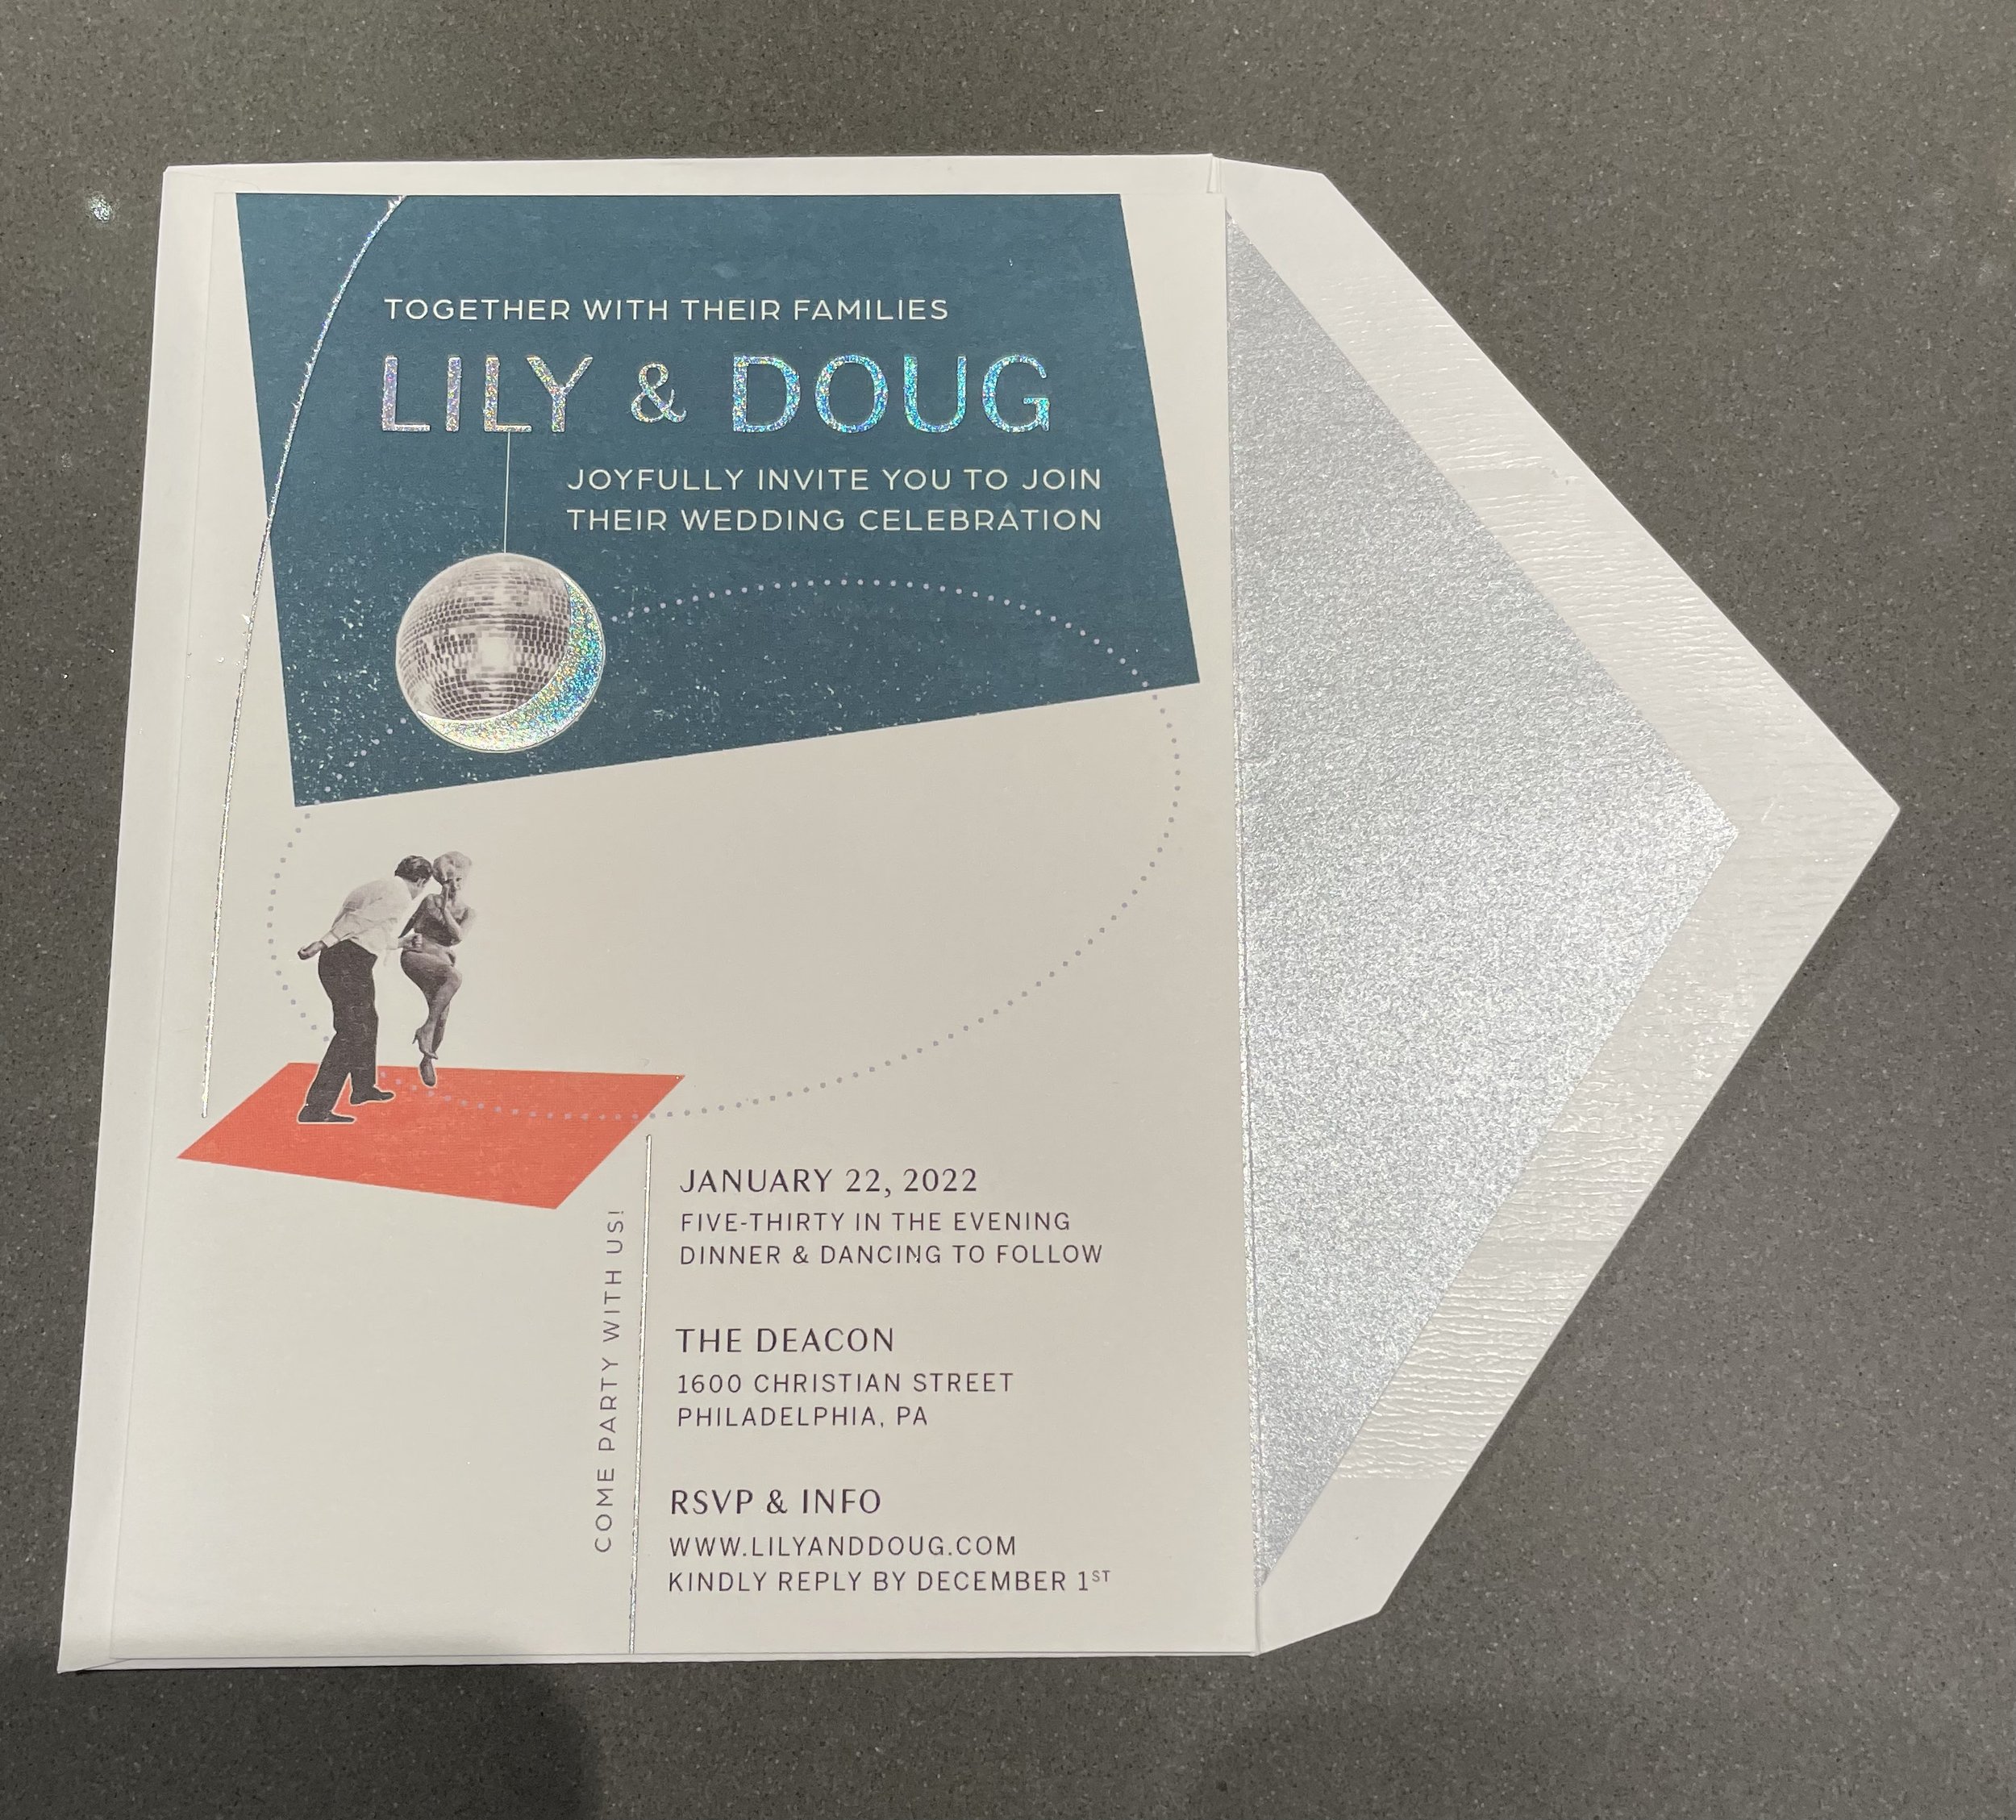 Lily &amp; Doug's Wedding Invitation